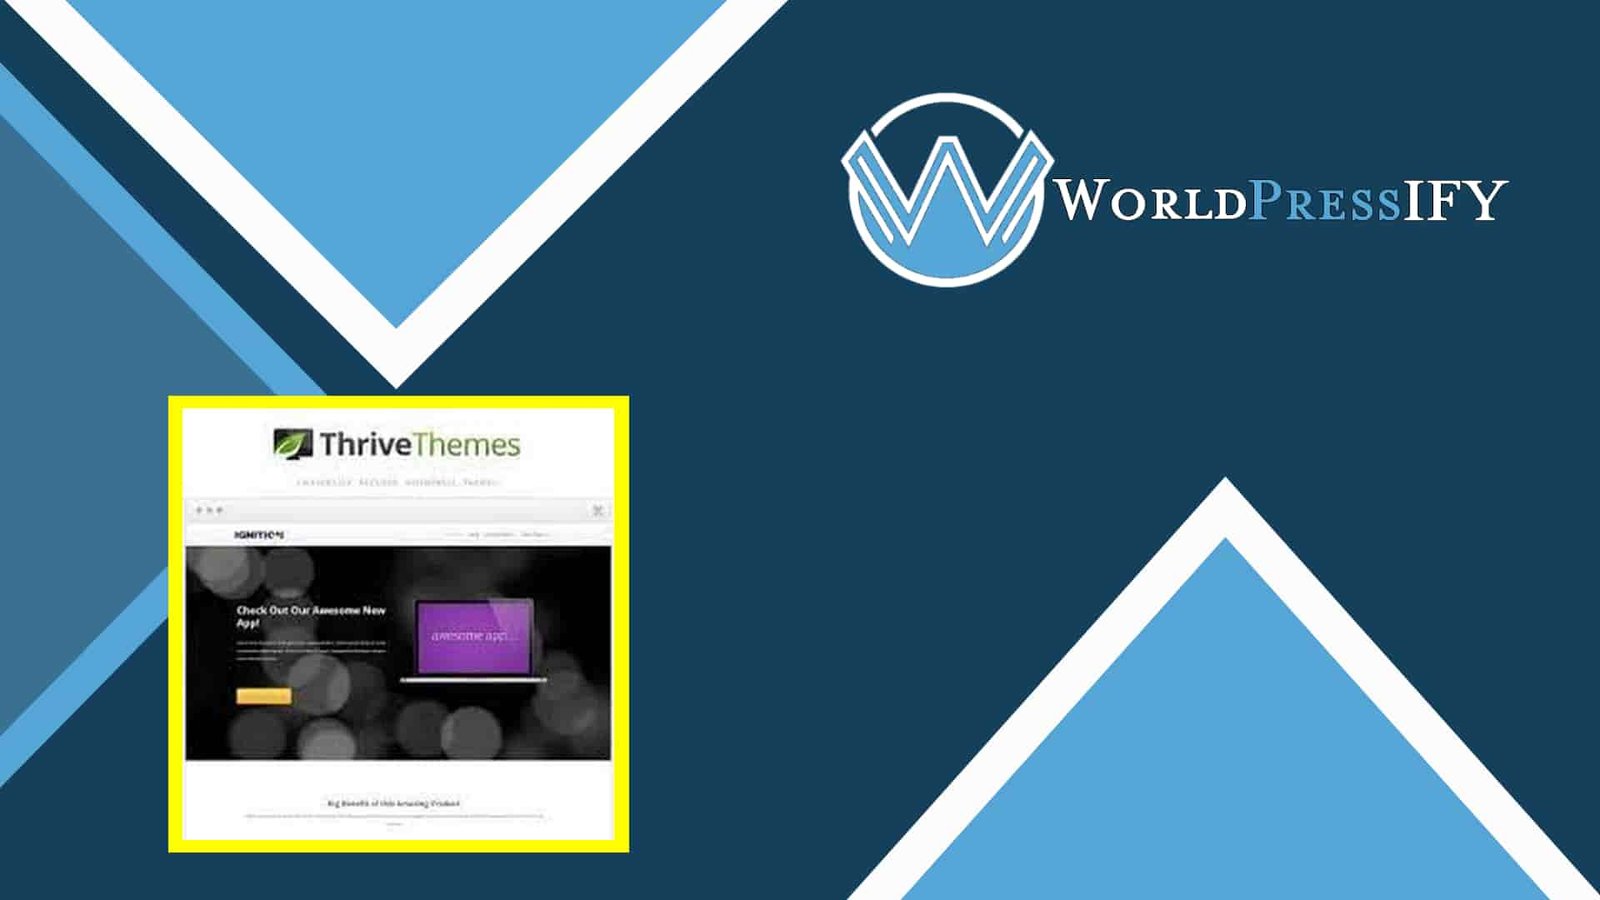 Thrive Themes Ignition WordPress Theme - WorldPress IFY